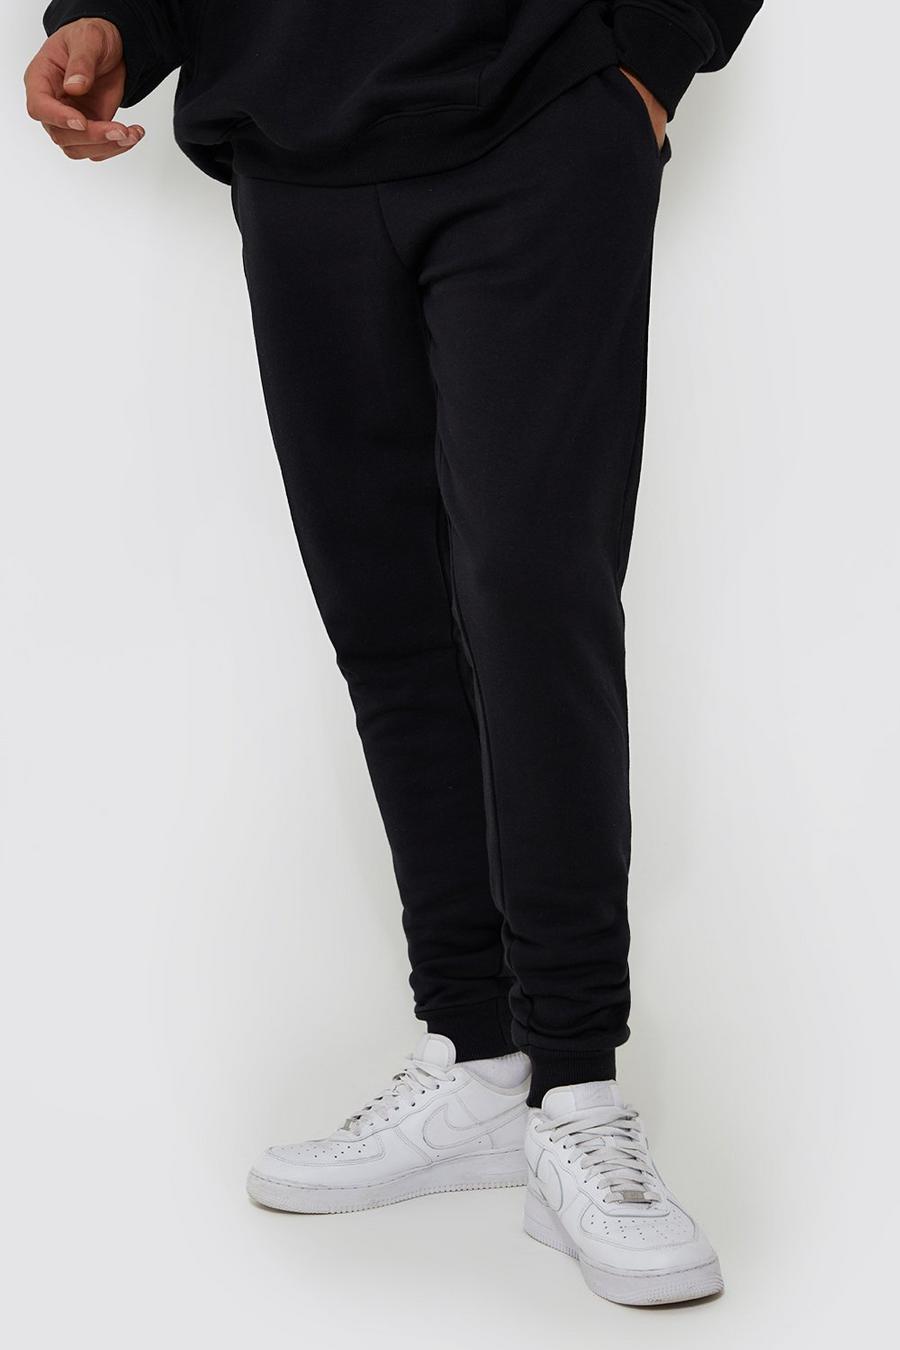 Pantaloni tuta Tall Basic Skinny Fit in cotone REEL, Black nero